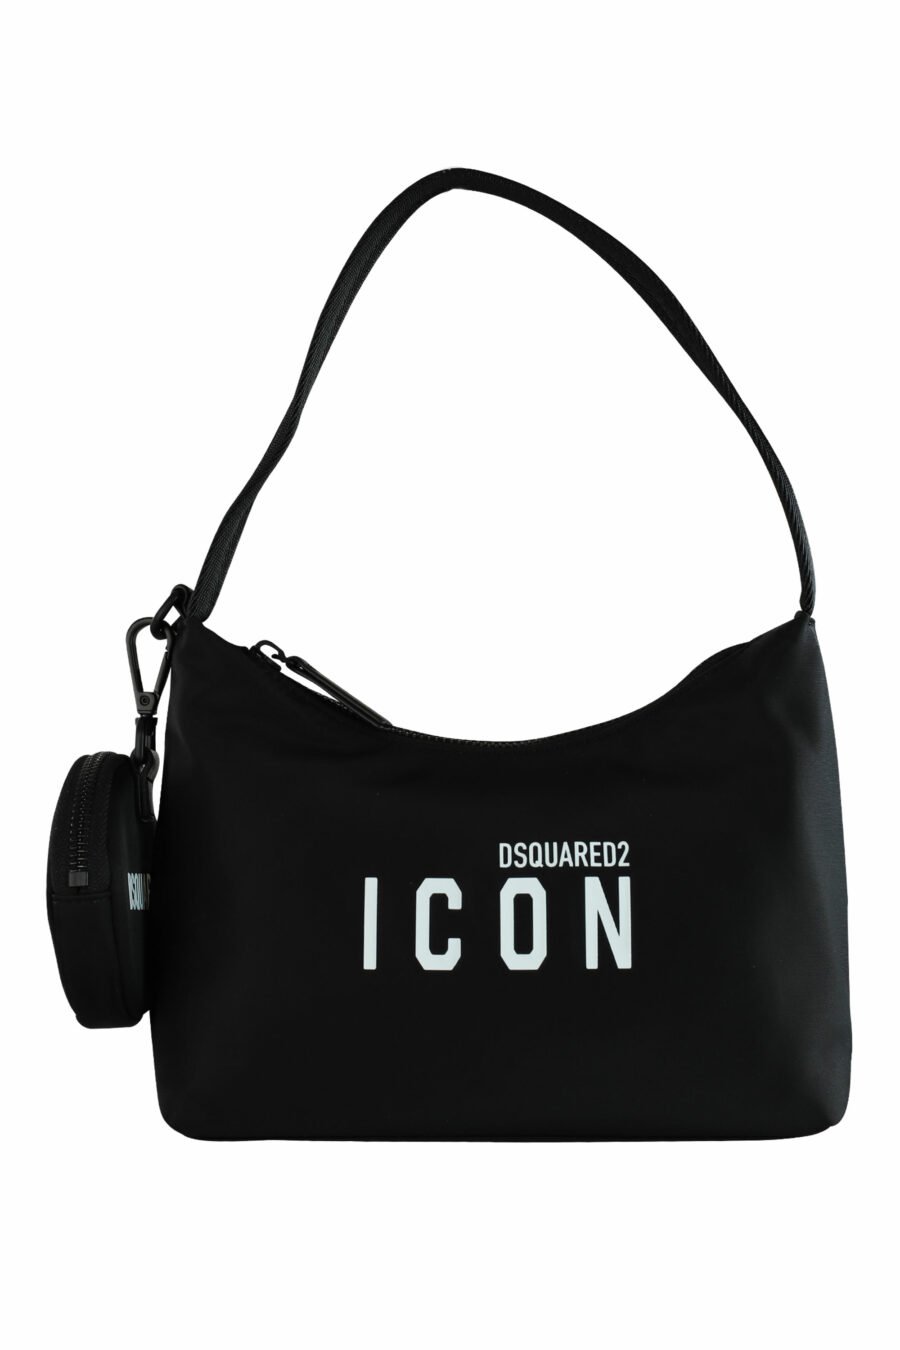 Black hobo style shoulder bag with "icon" logo - IMG 1244